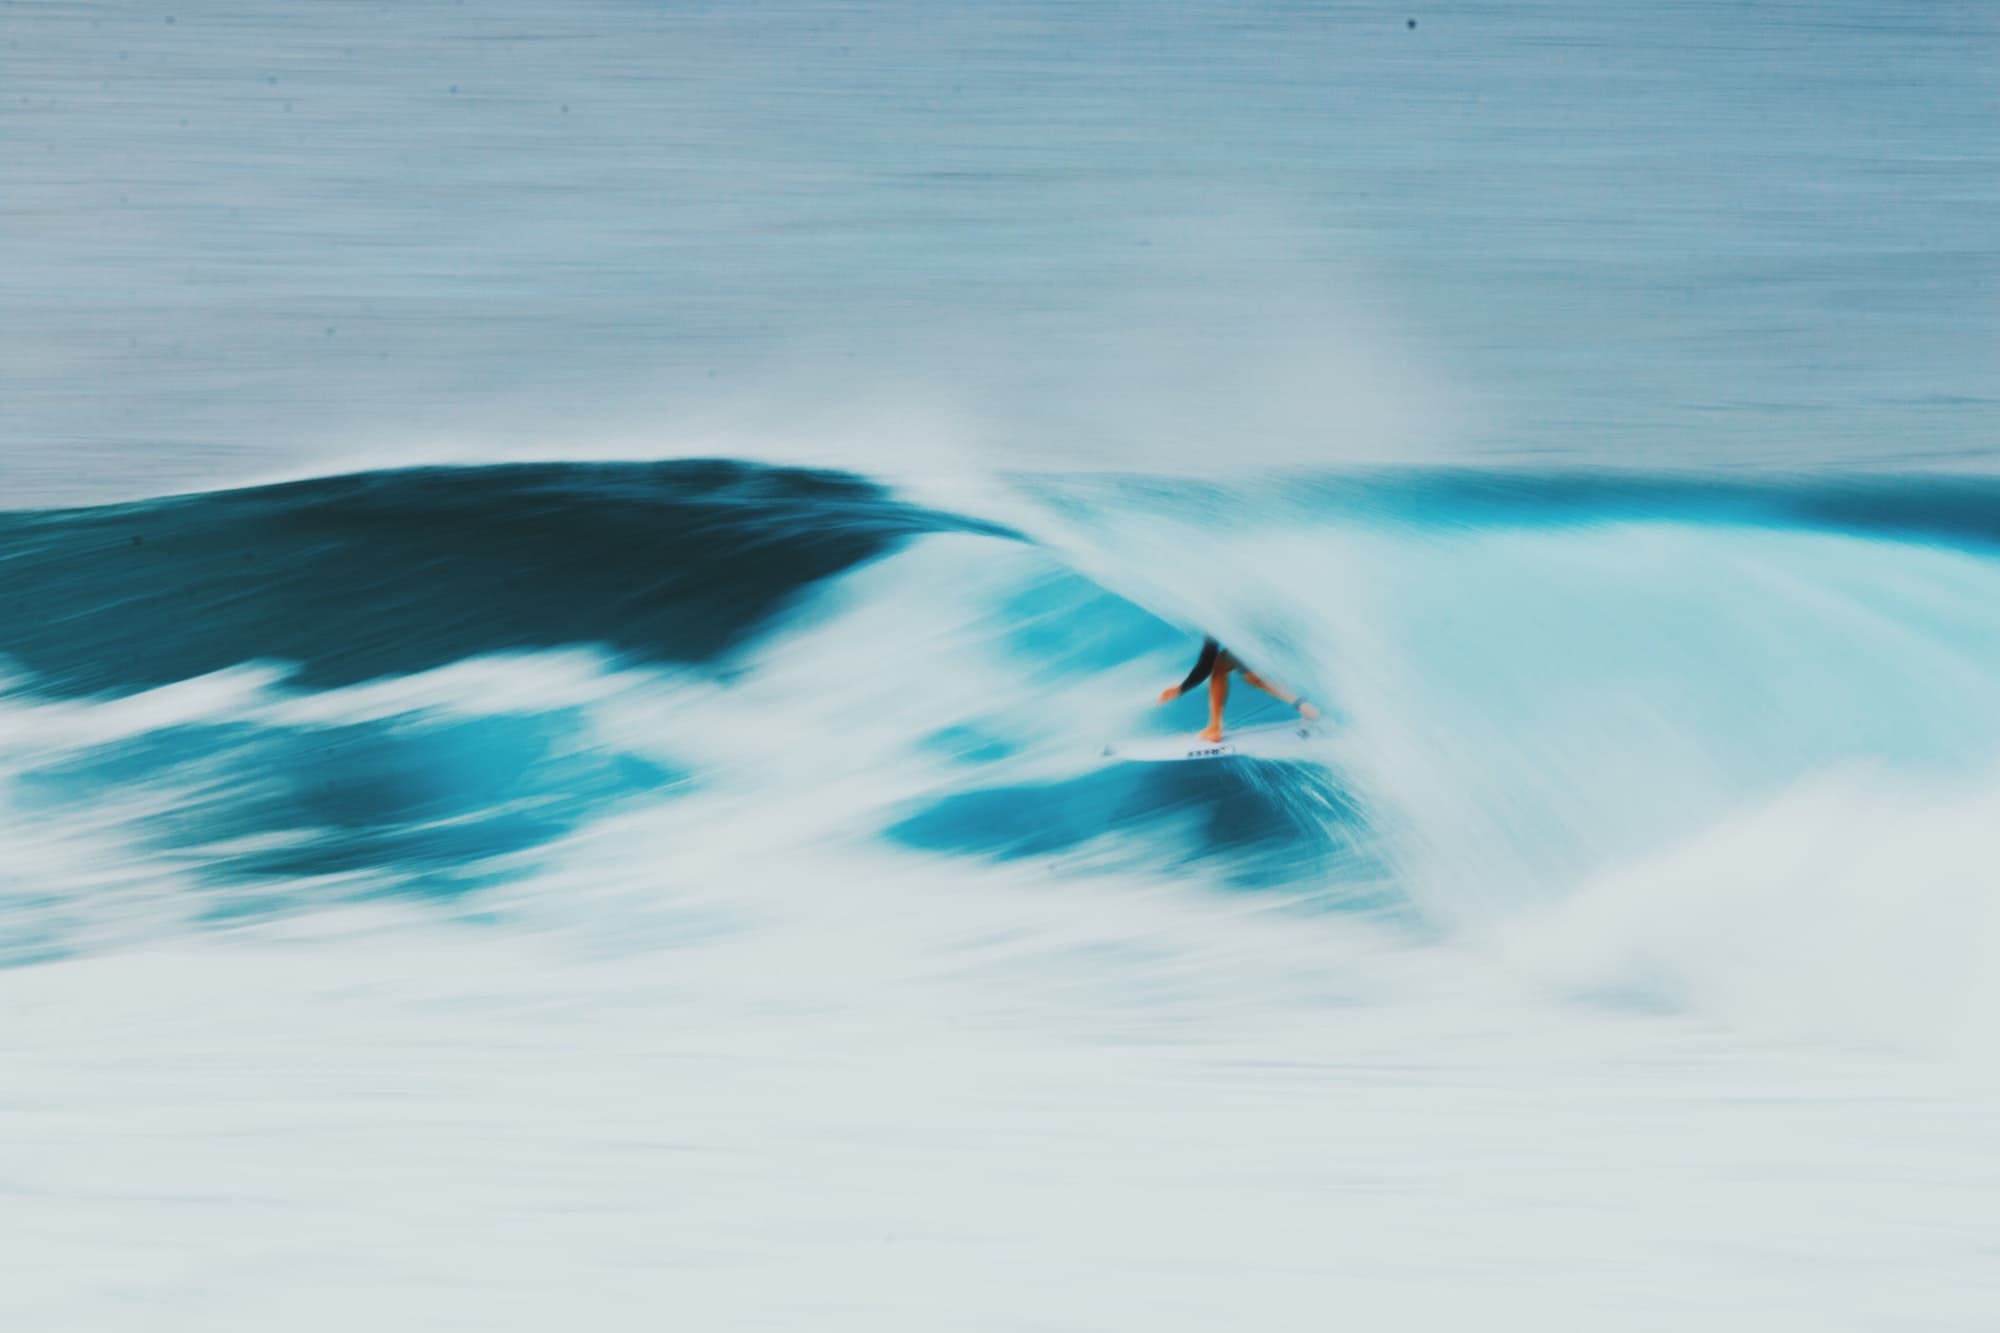 man surfing wave in Asia